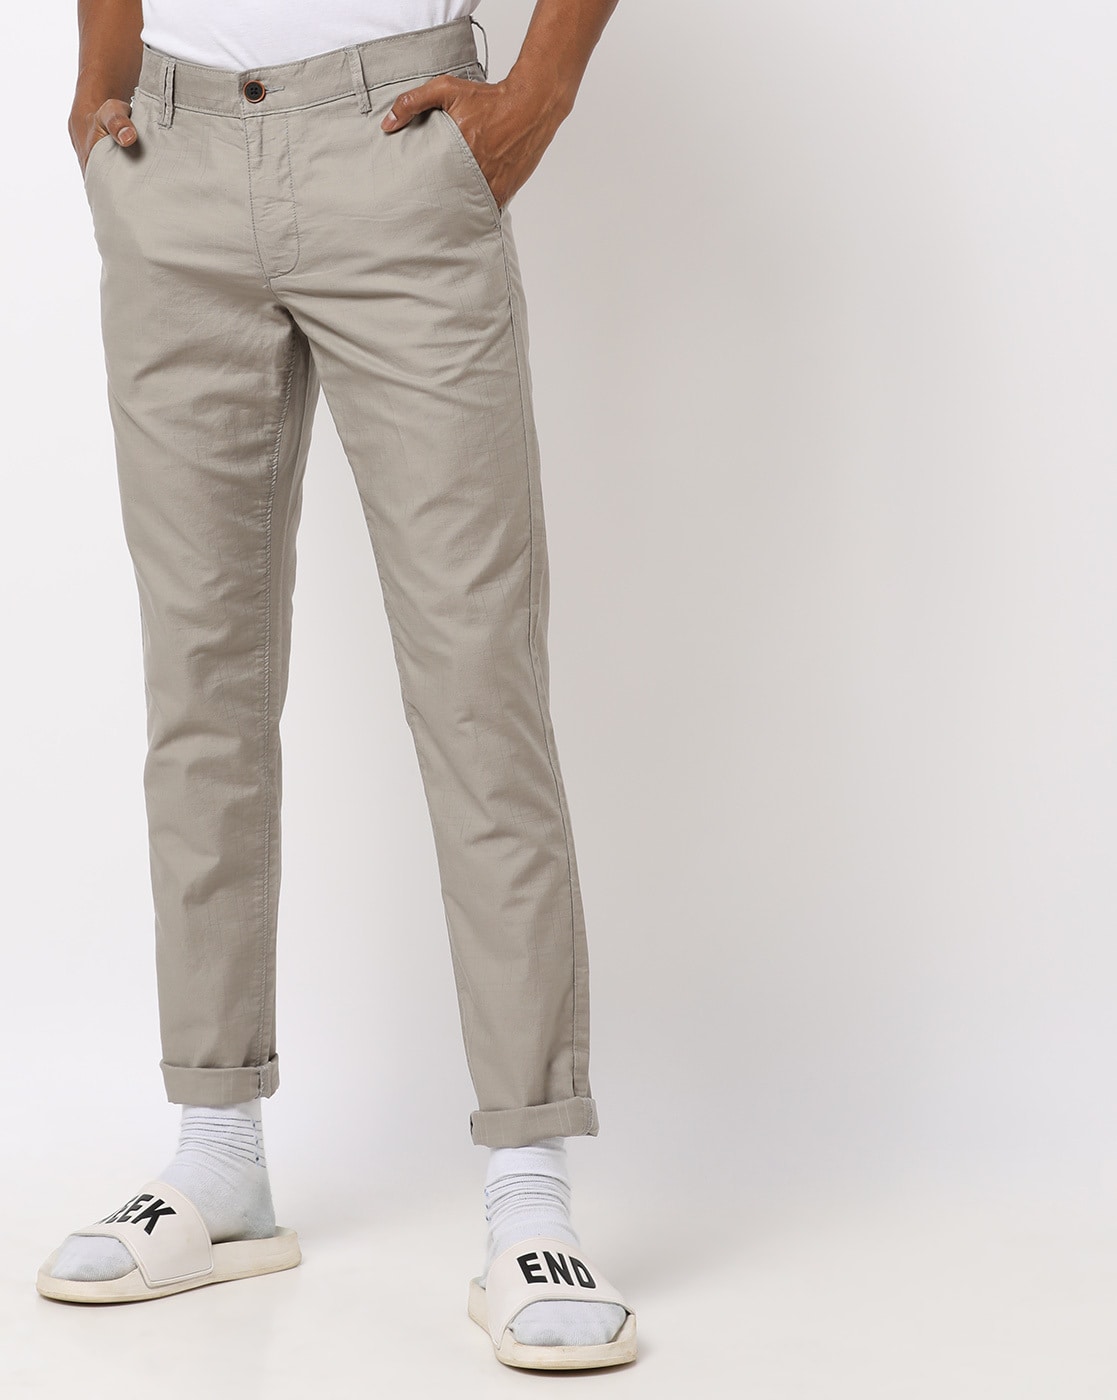 Buy Black Trousers  Pants for Men by INDIGO NATION Online  Ajiocom